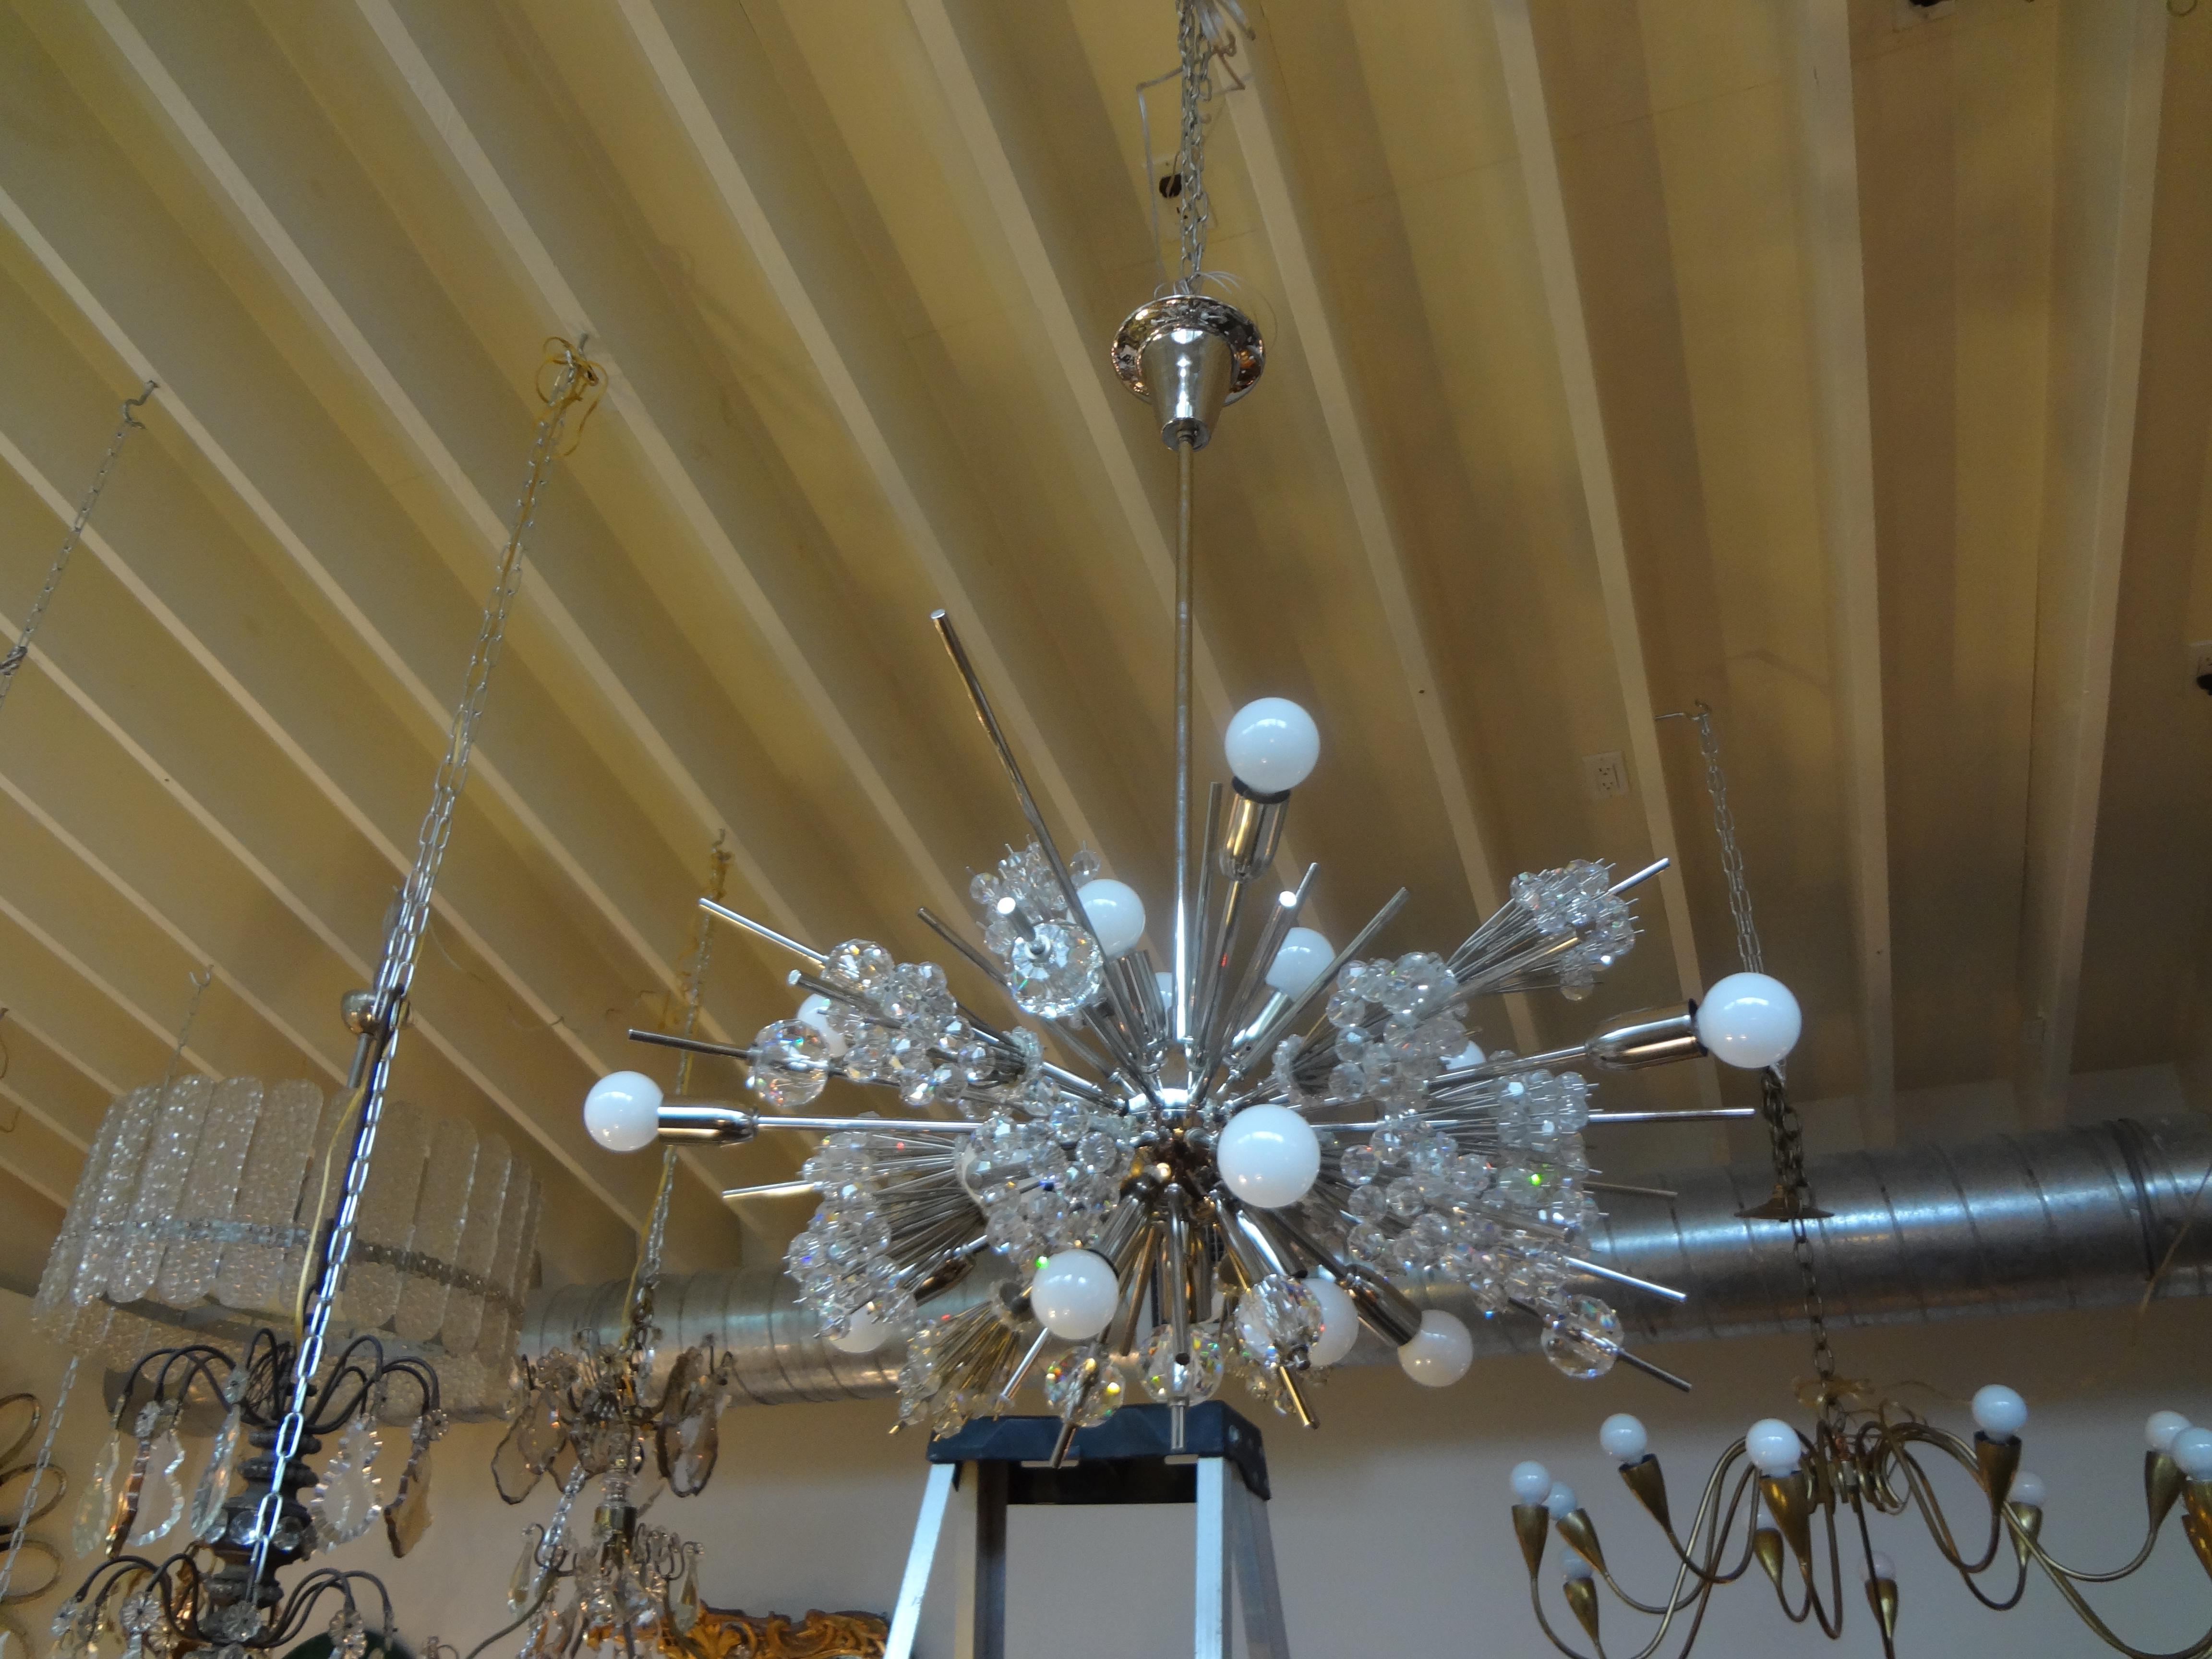 lobmeyr’s iconic metropolitan chandelier